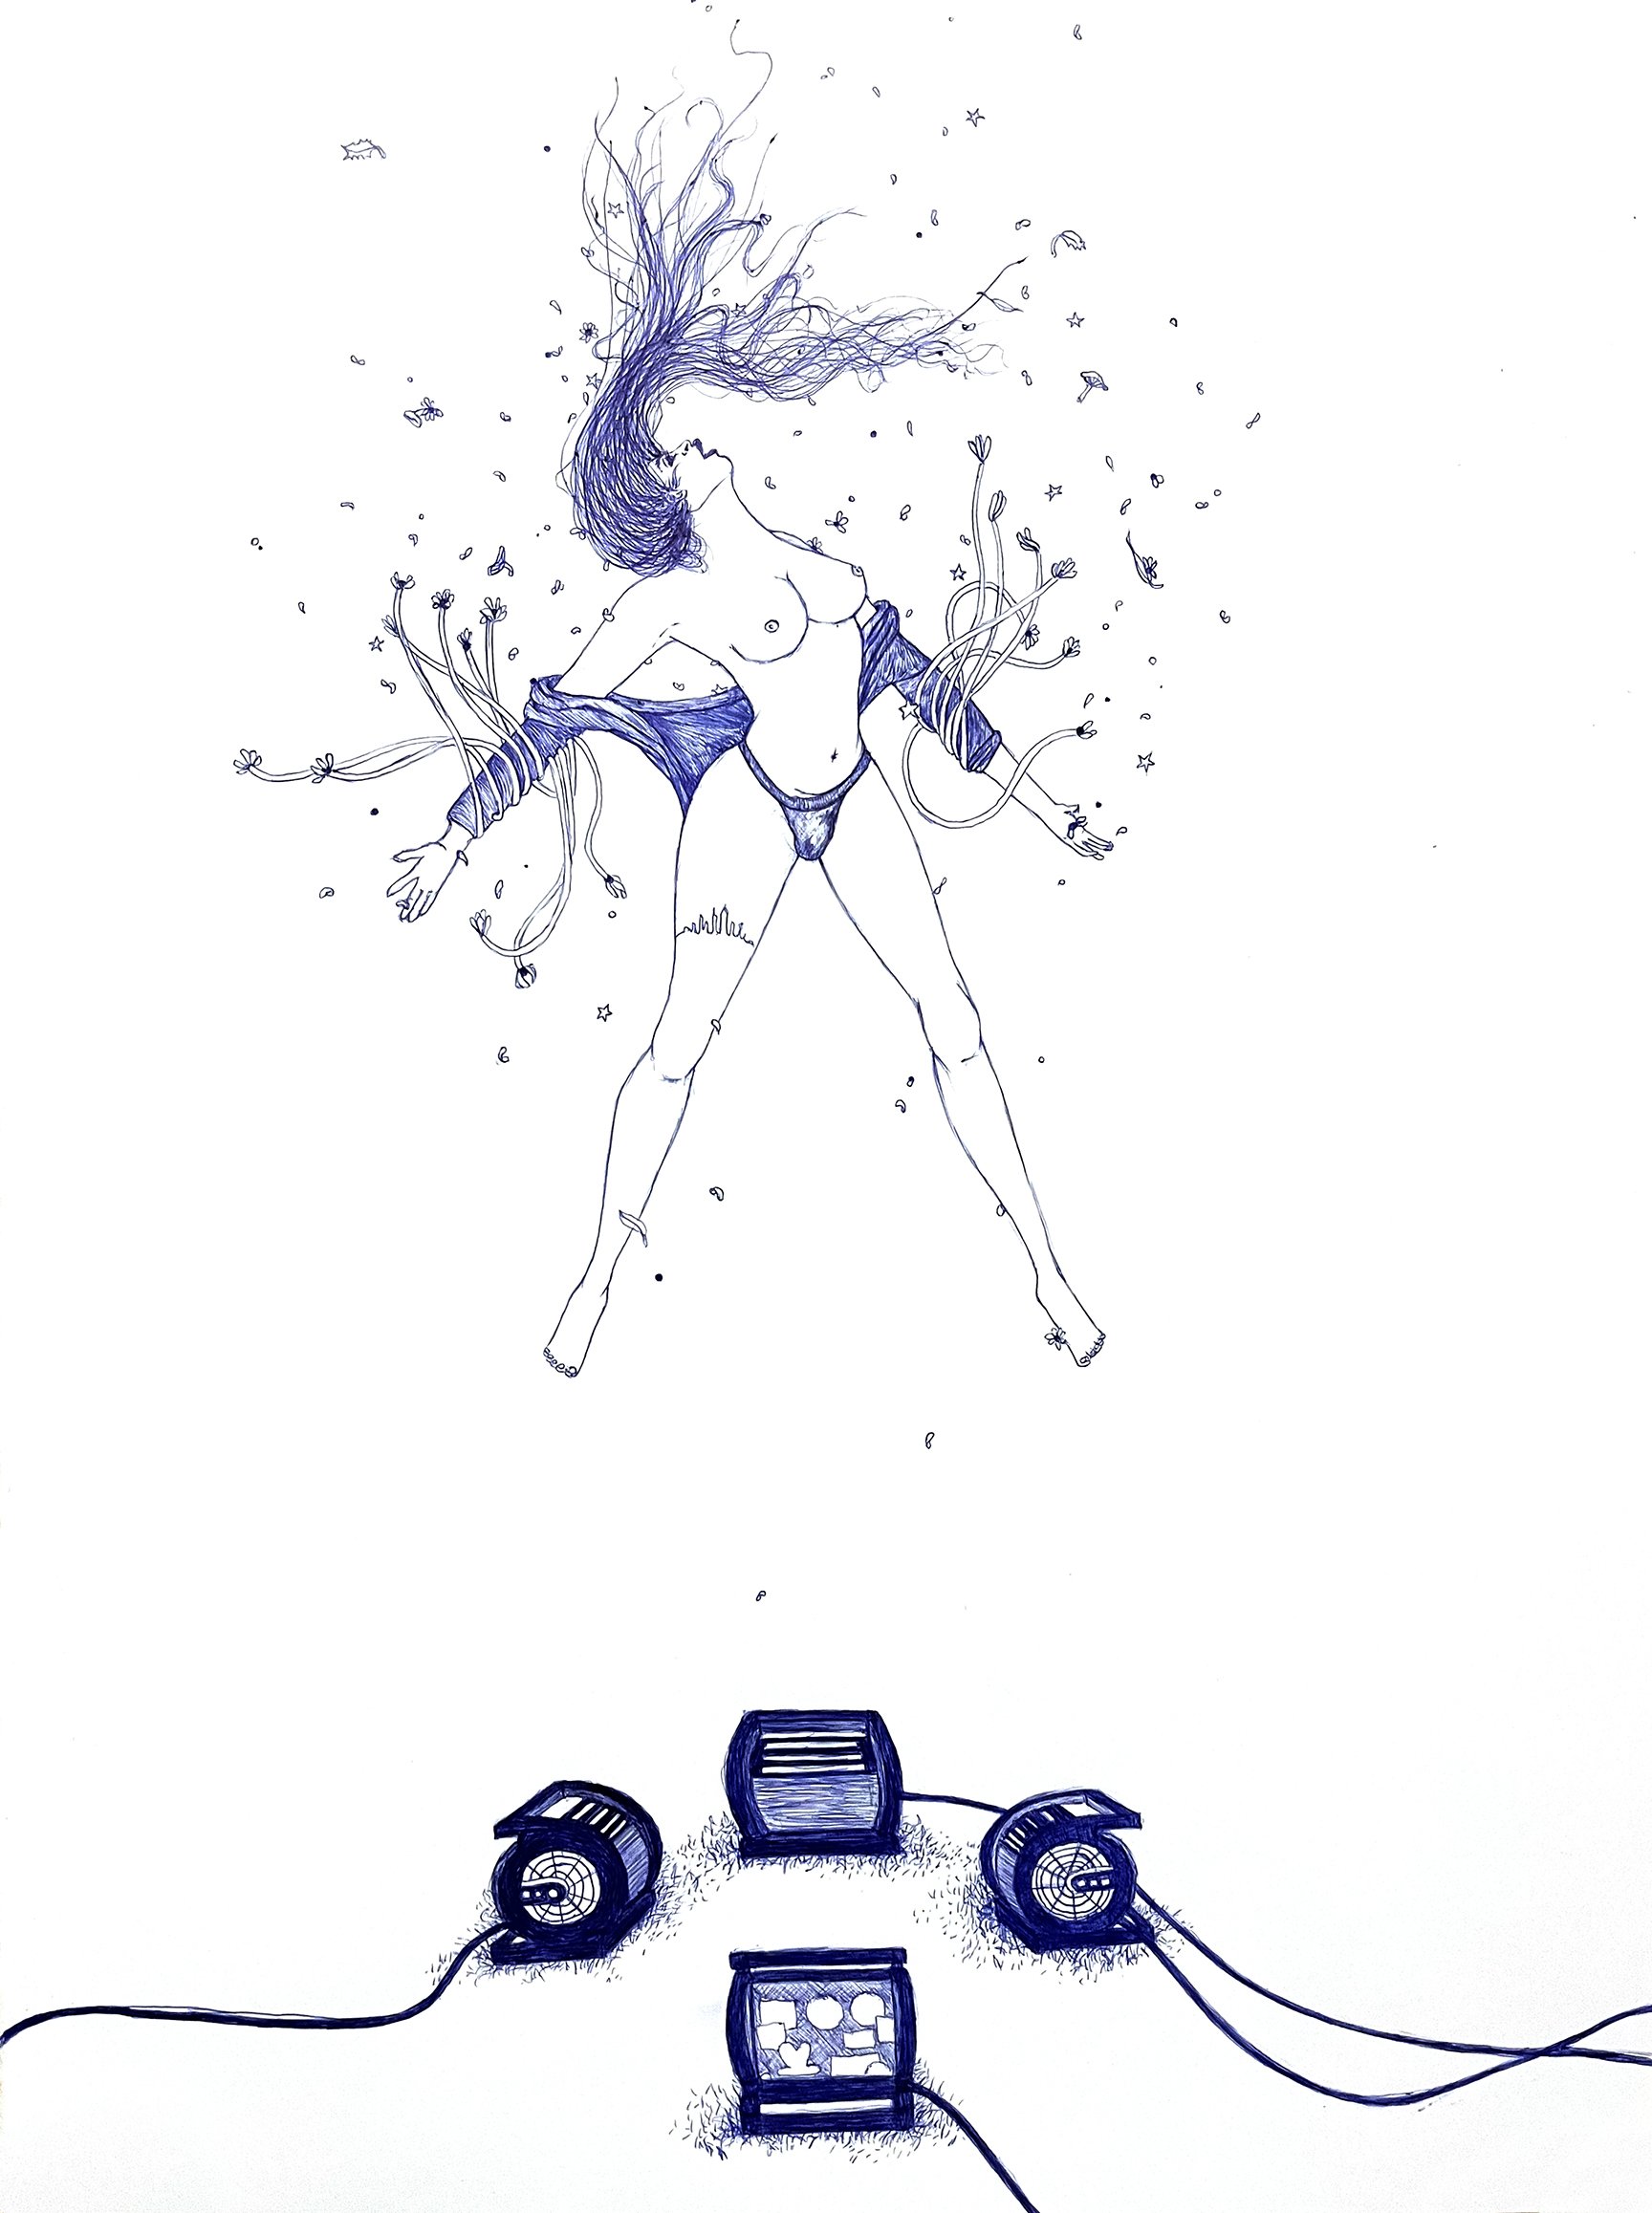  Charlene, 2022 Blue pen on paper 18 x 24 inches  Anime drag community character design 